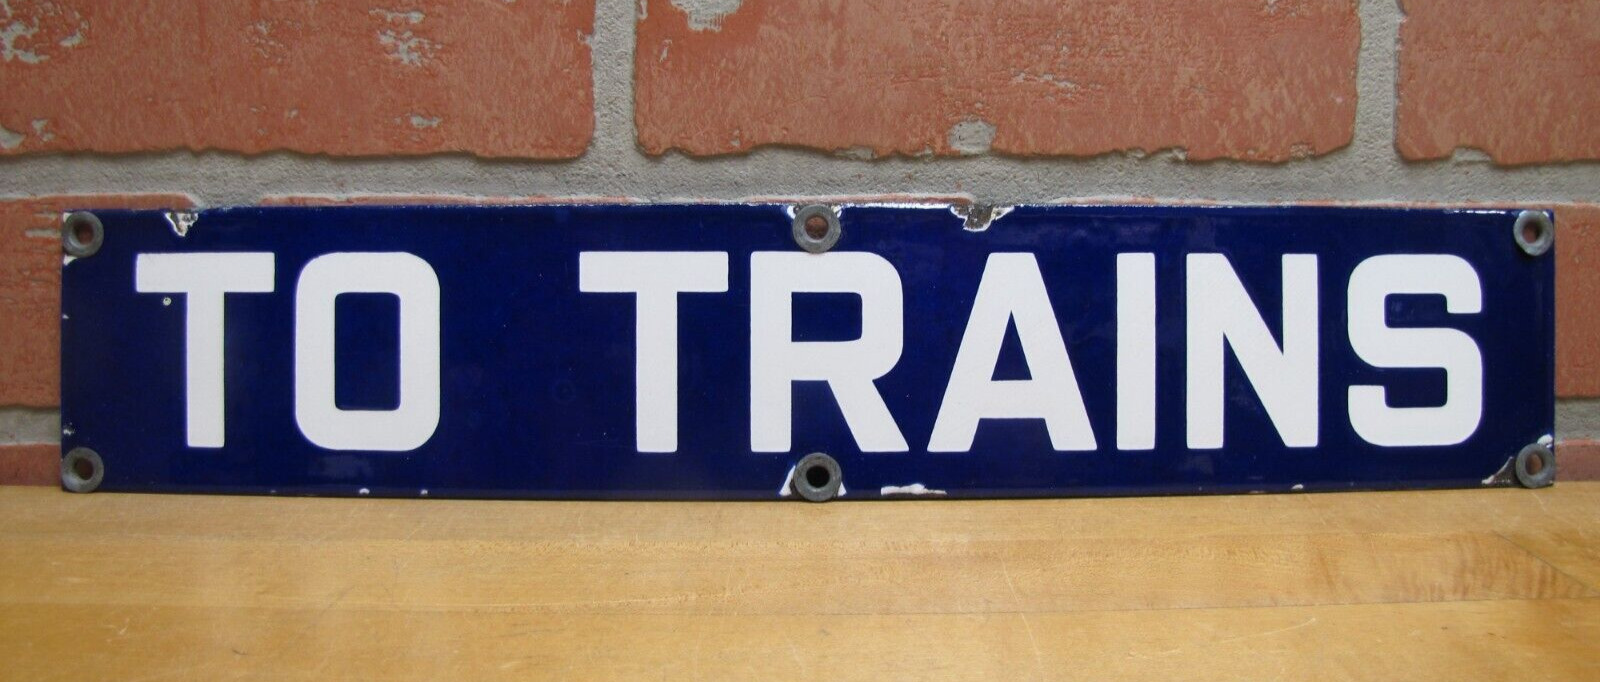 TO TRAINS Original Old Porcelain Train Station Subway Railroad Sign